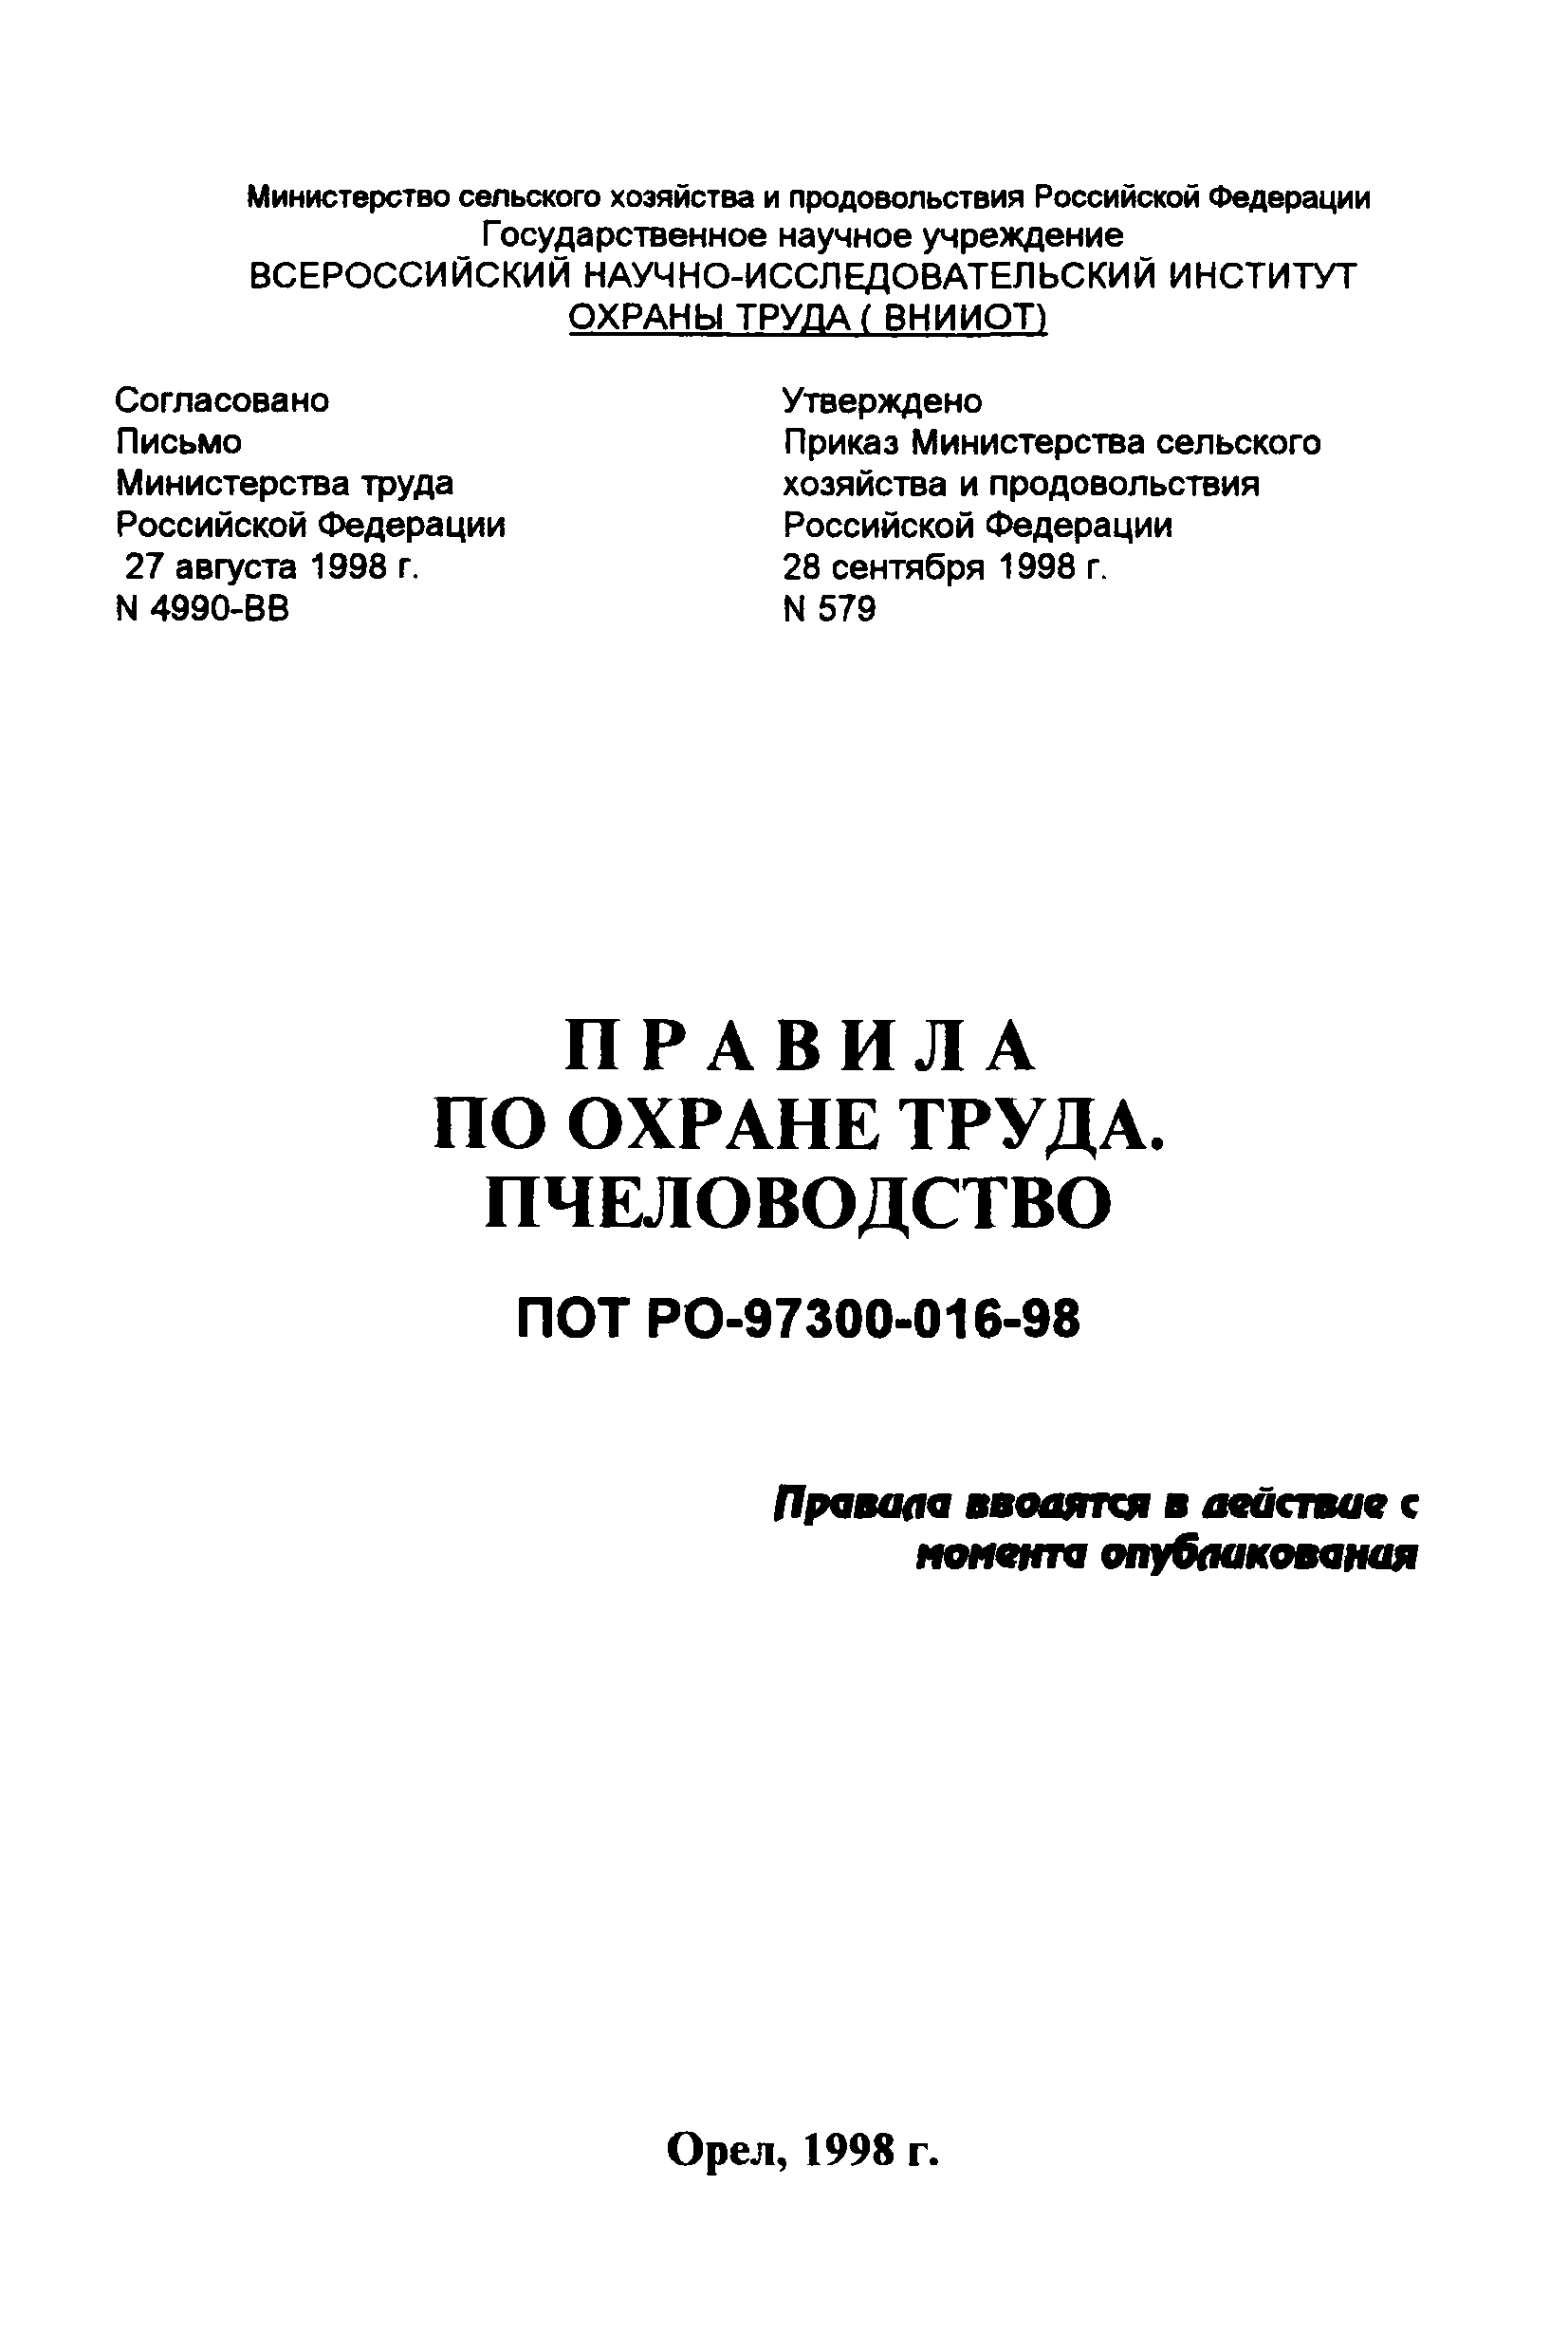 ПОТ Р О-97300-016-98